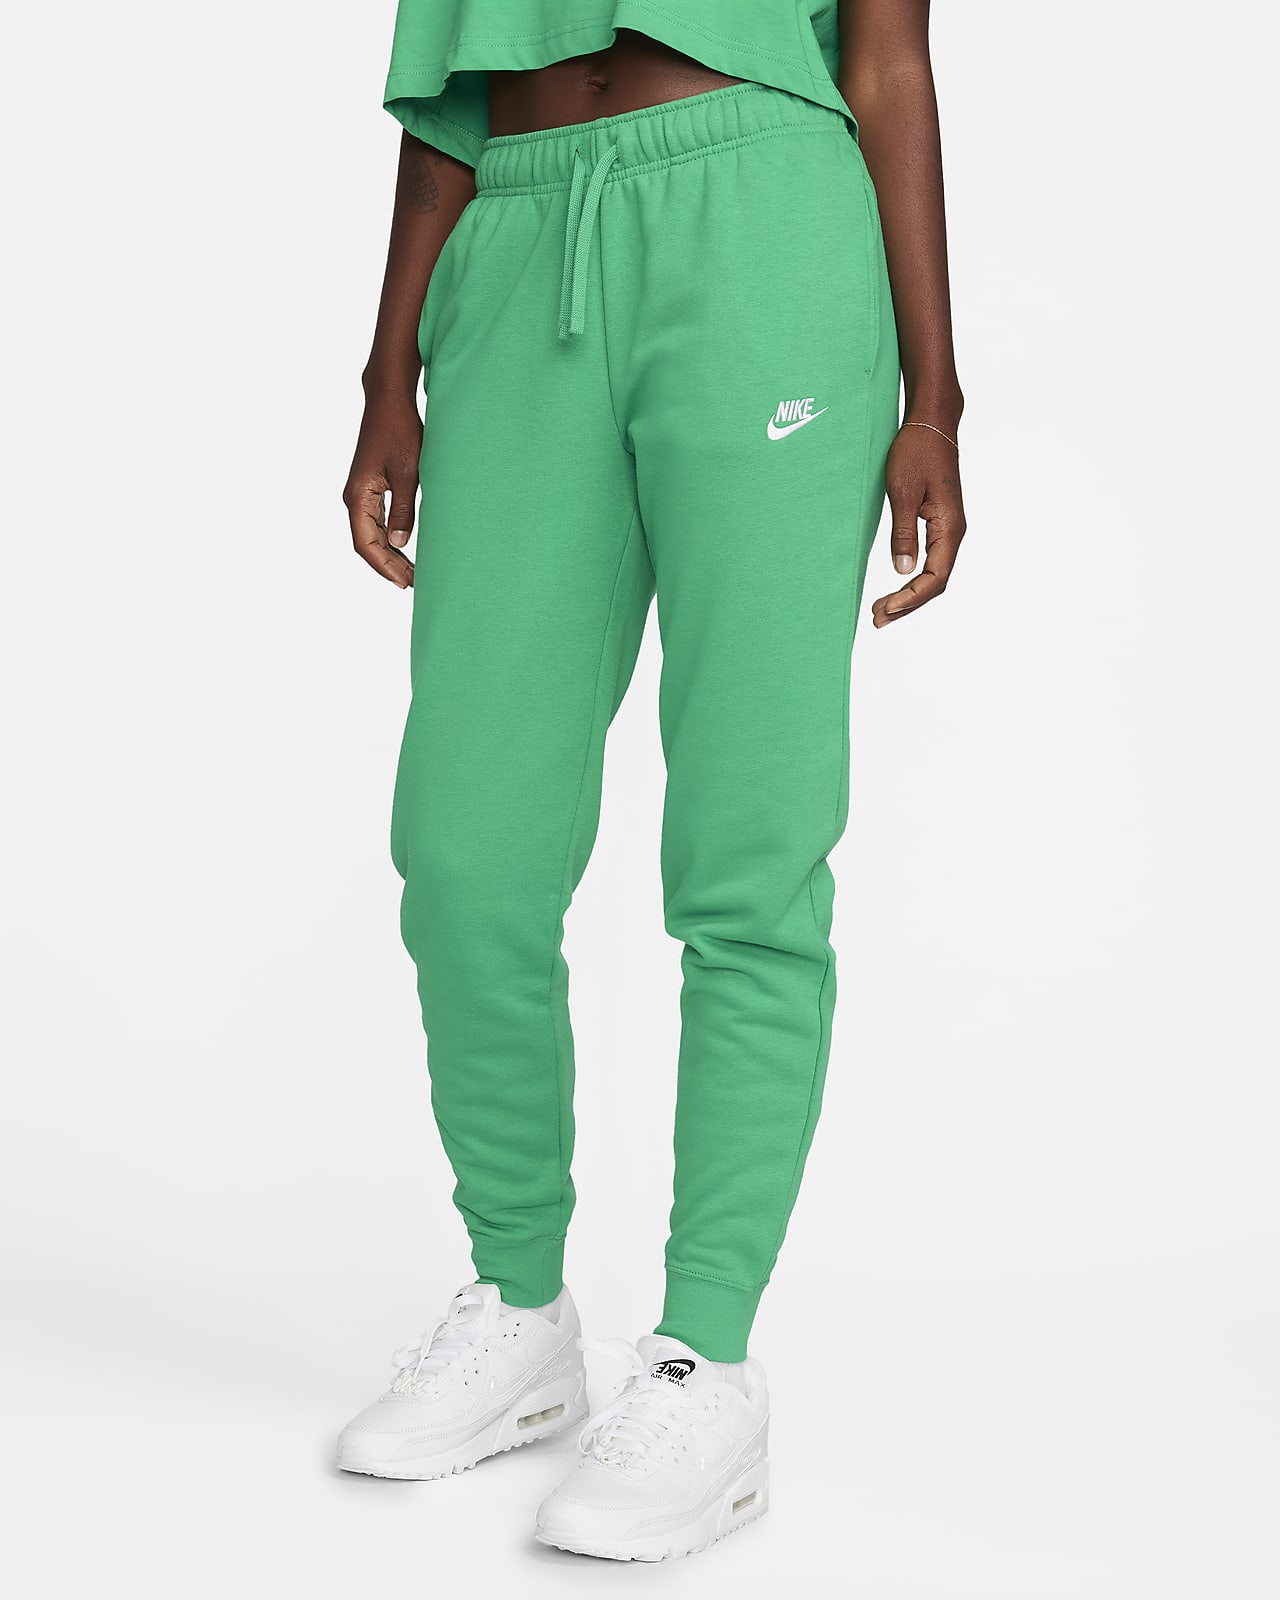 Bas jogging Nike Sportswear Essential pour Femme - BV4095-063 - Gris